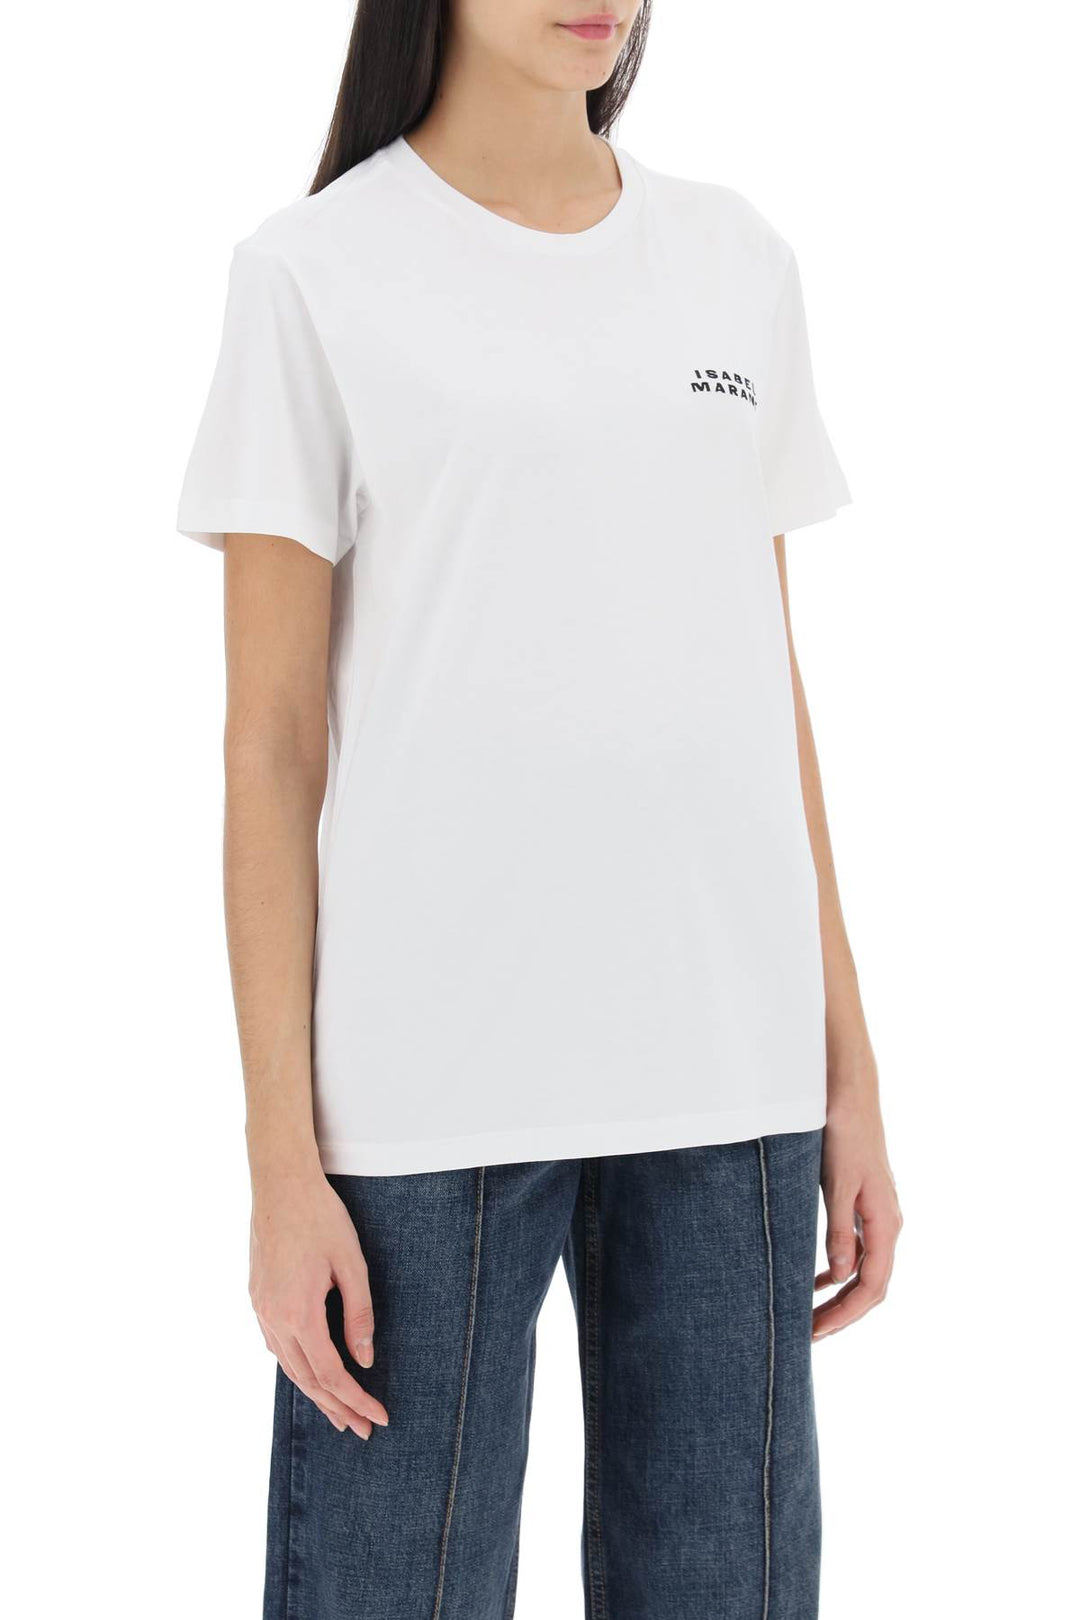 Isabel Marant Vidal Crew Neck T Shirt   Bianco